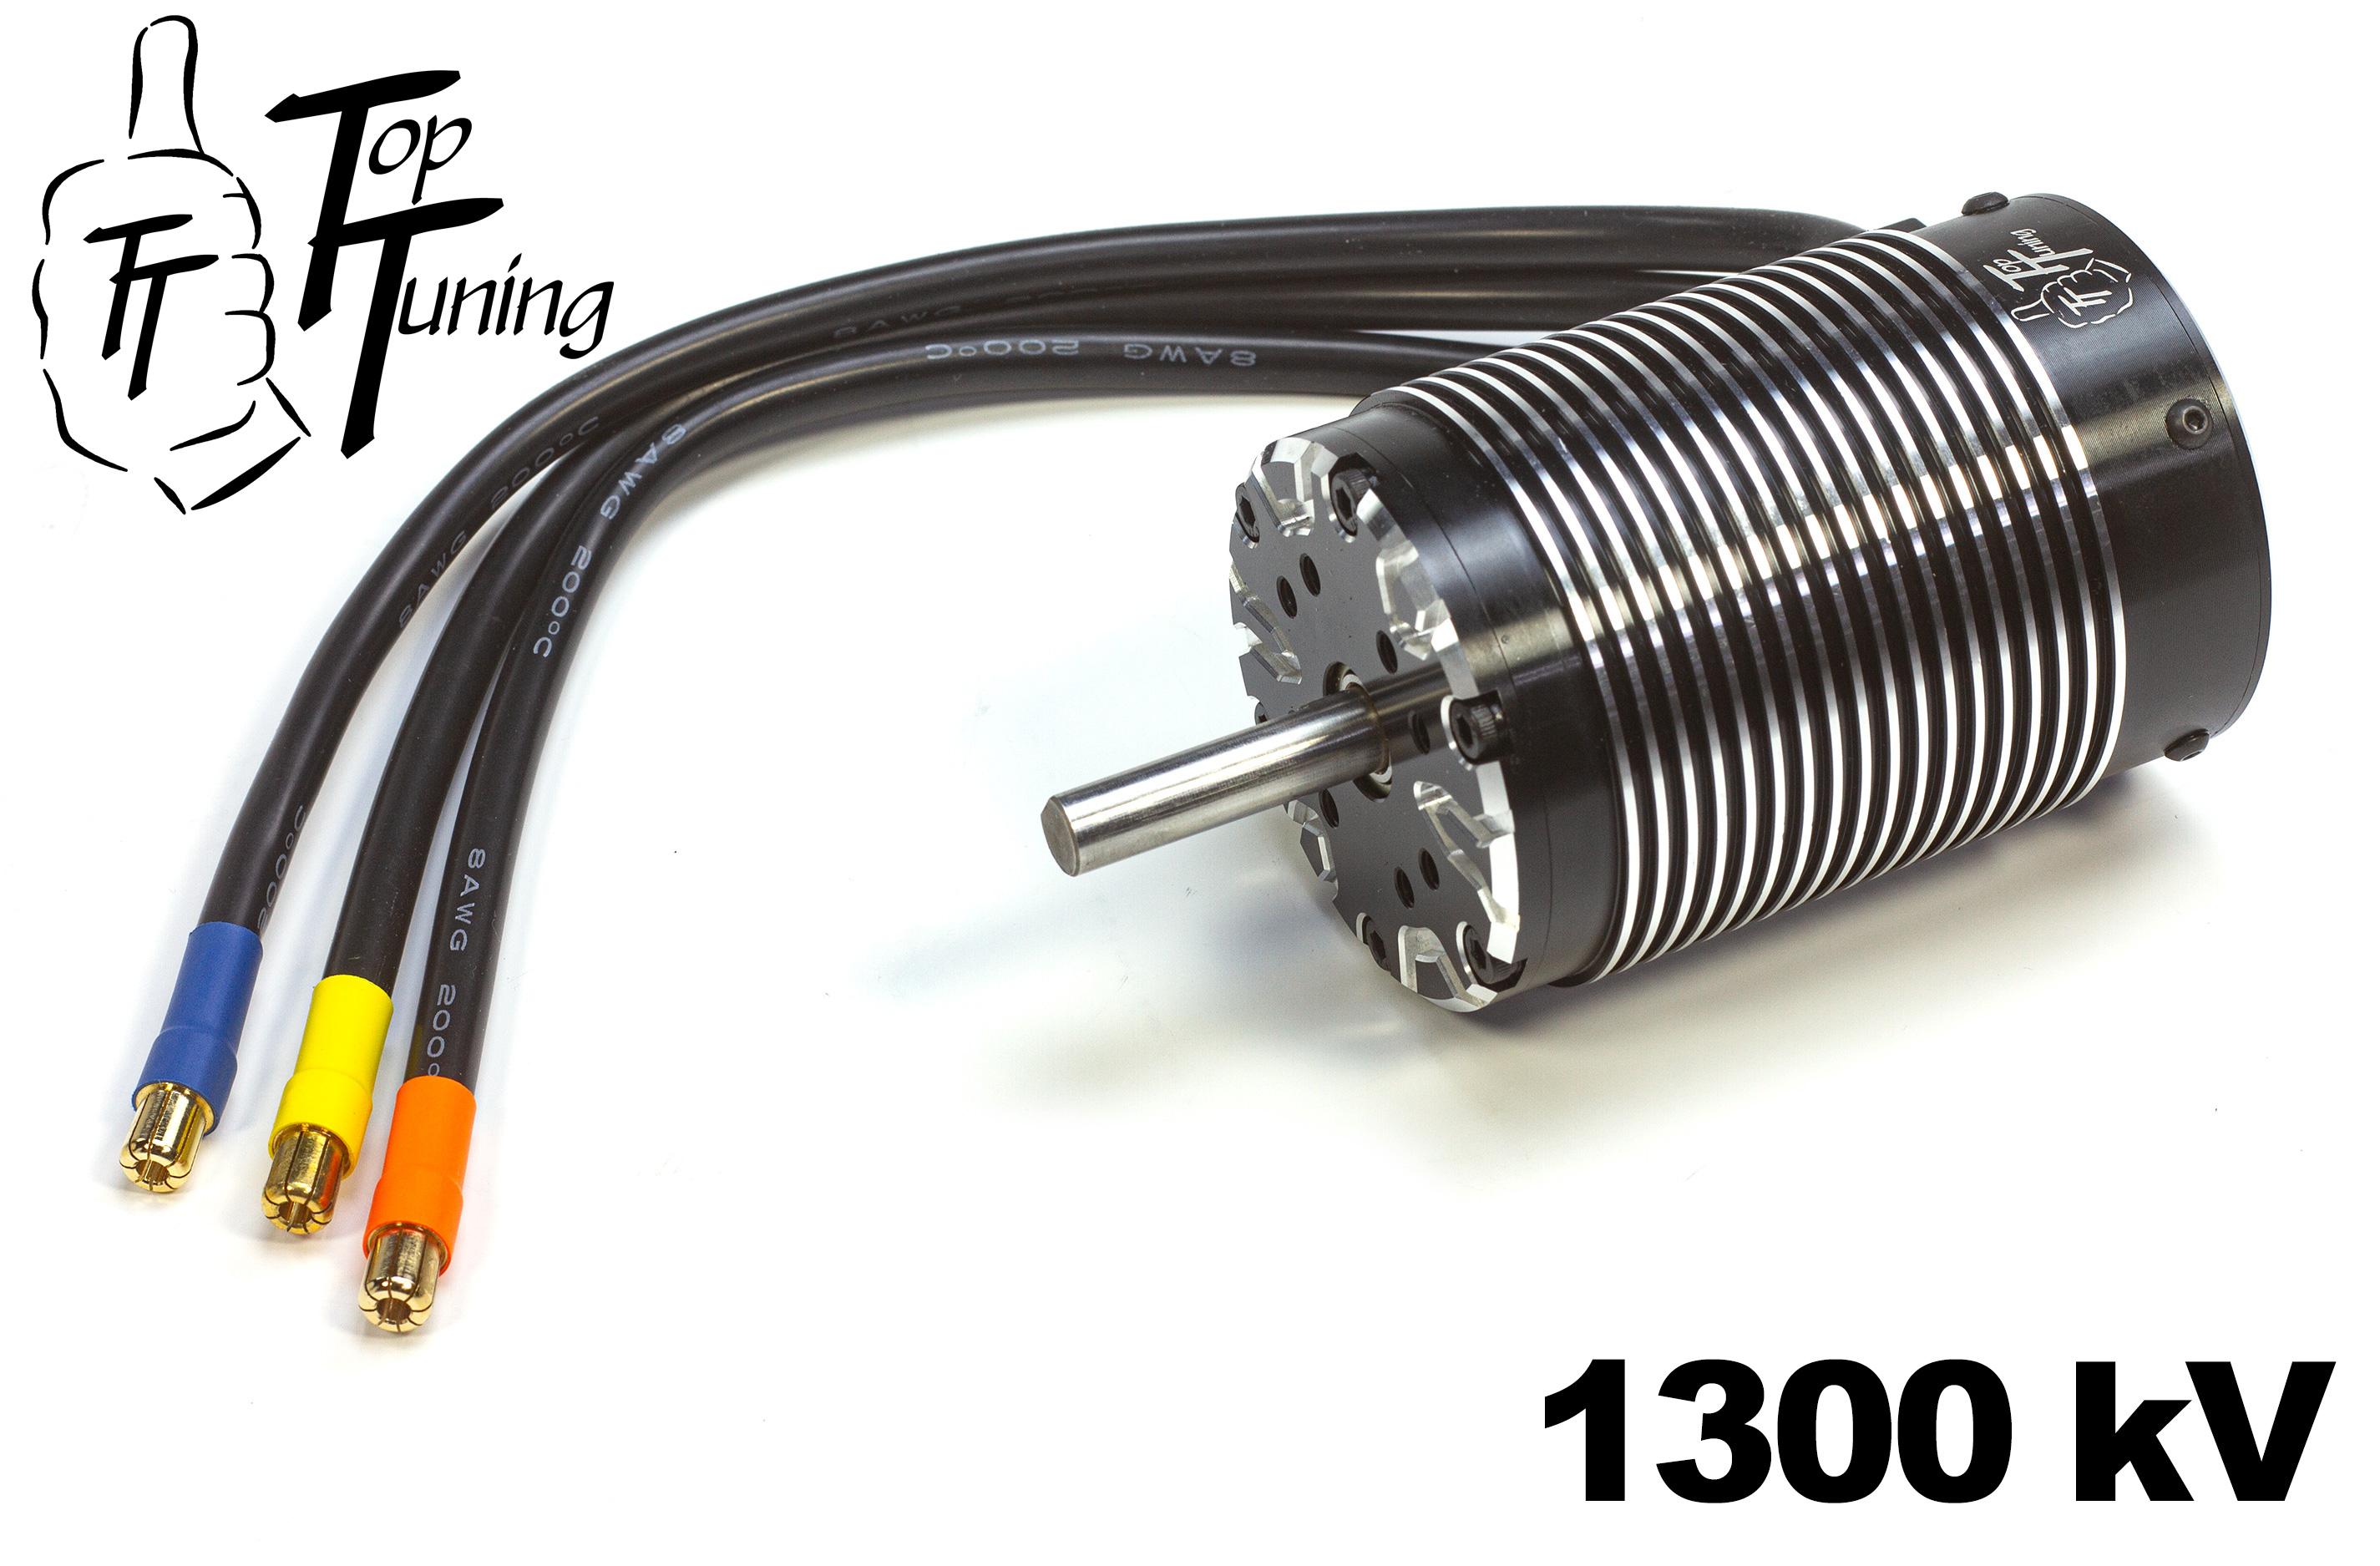 TT5682/02 Top Tuning Brushless Motor 1300 kV